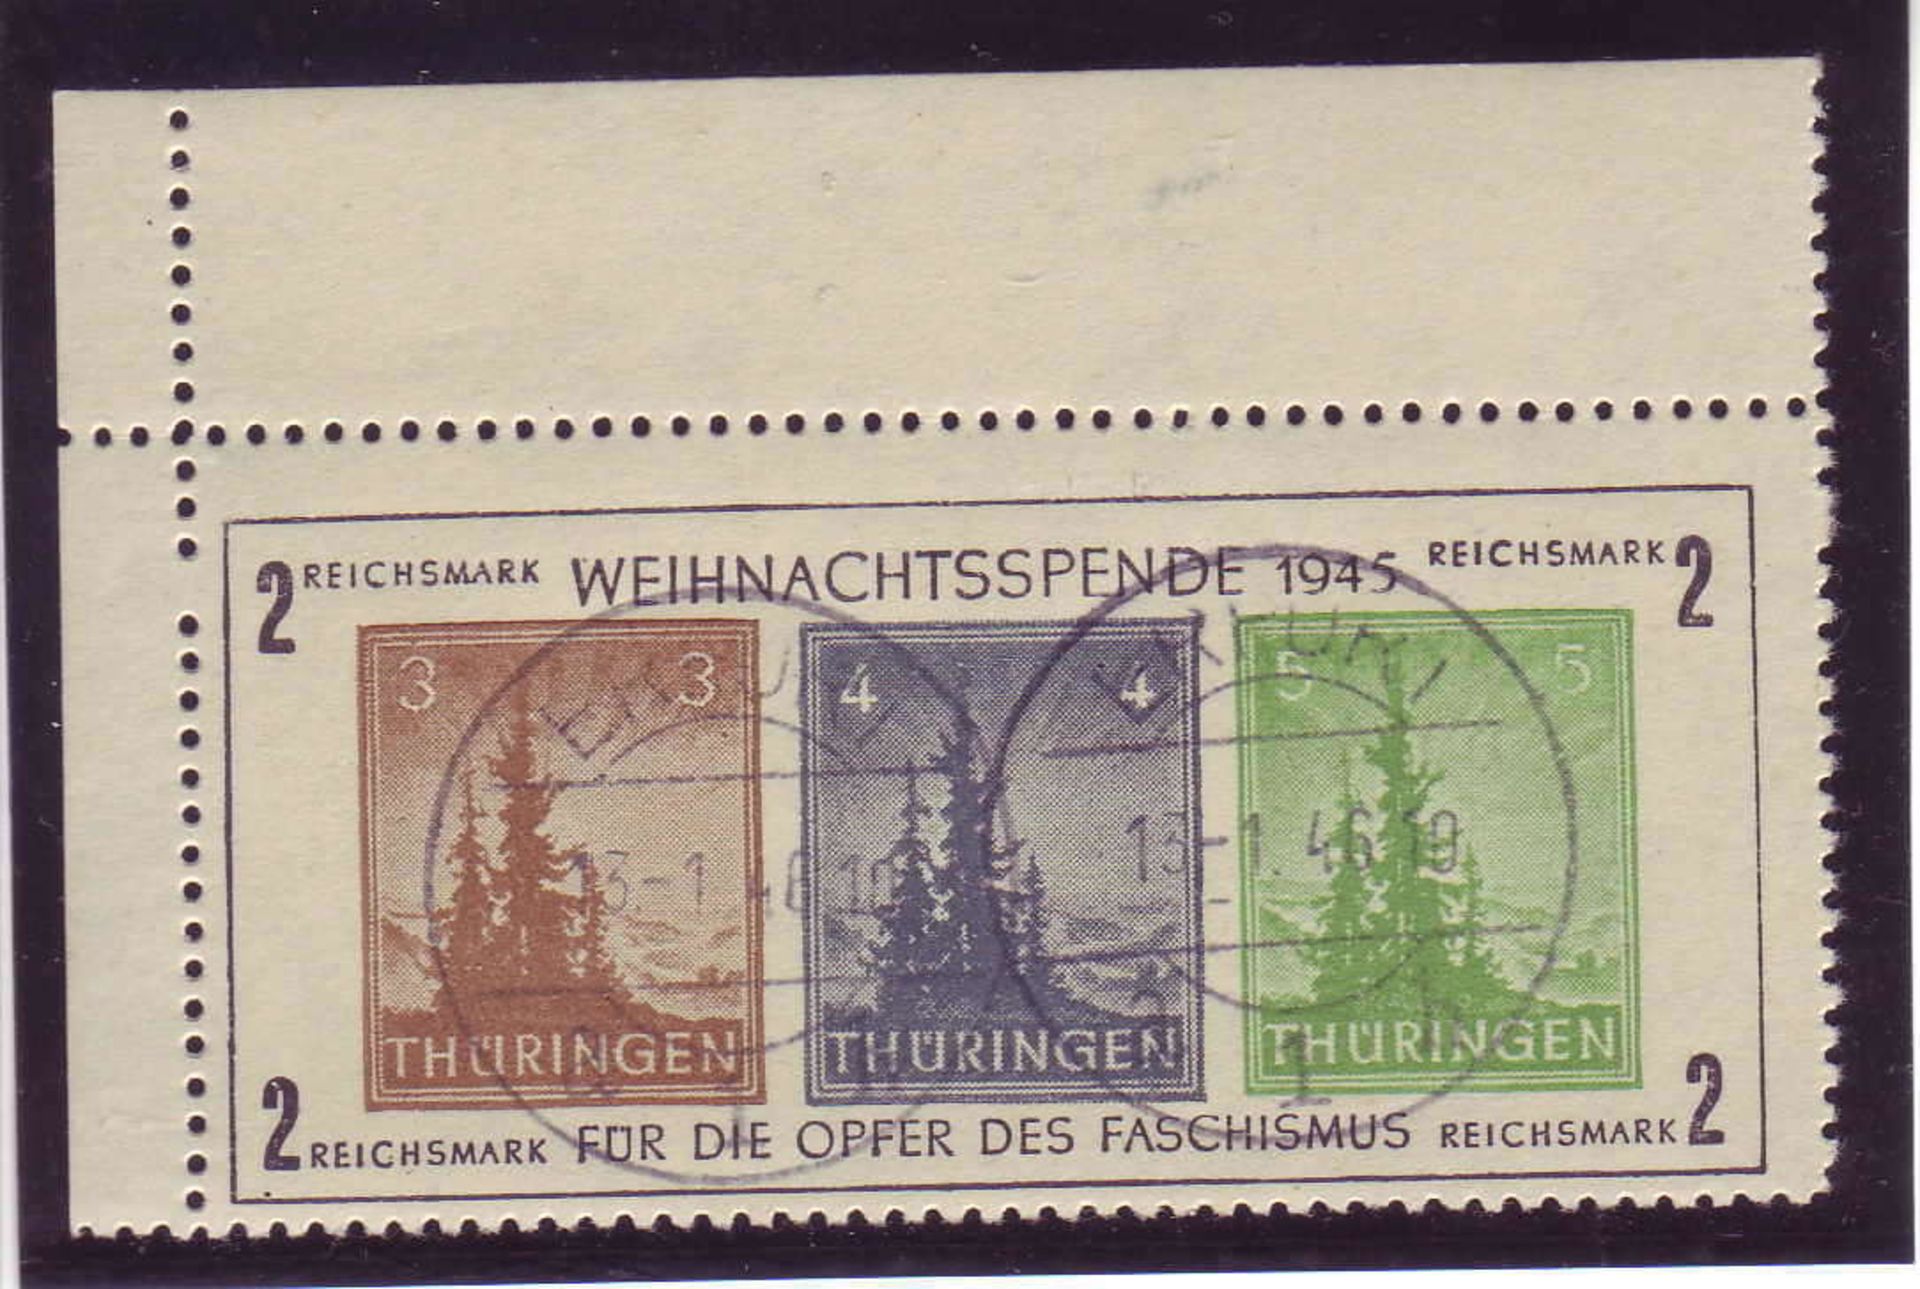 SBZ Thüringen 1945, Block1 t Type 1. Gestempelt. SBZ Thuringia 1945, Block 1 t Type 1. Stamped.